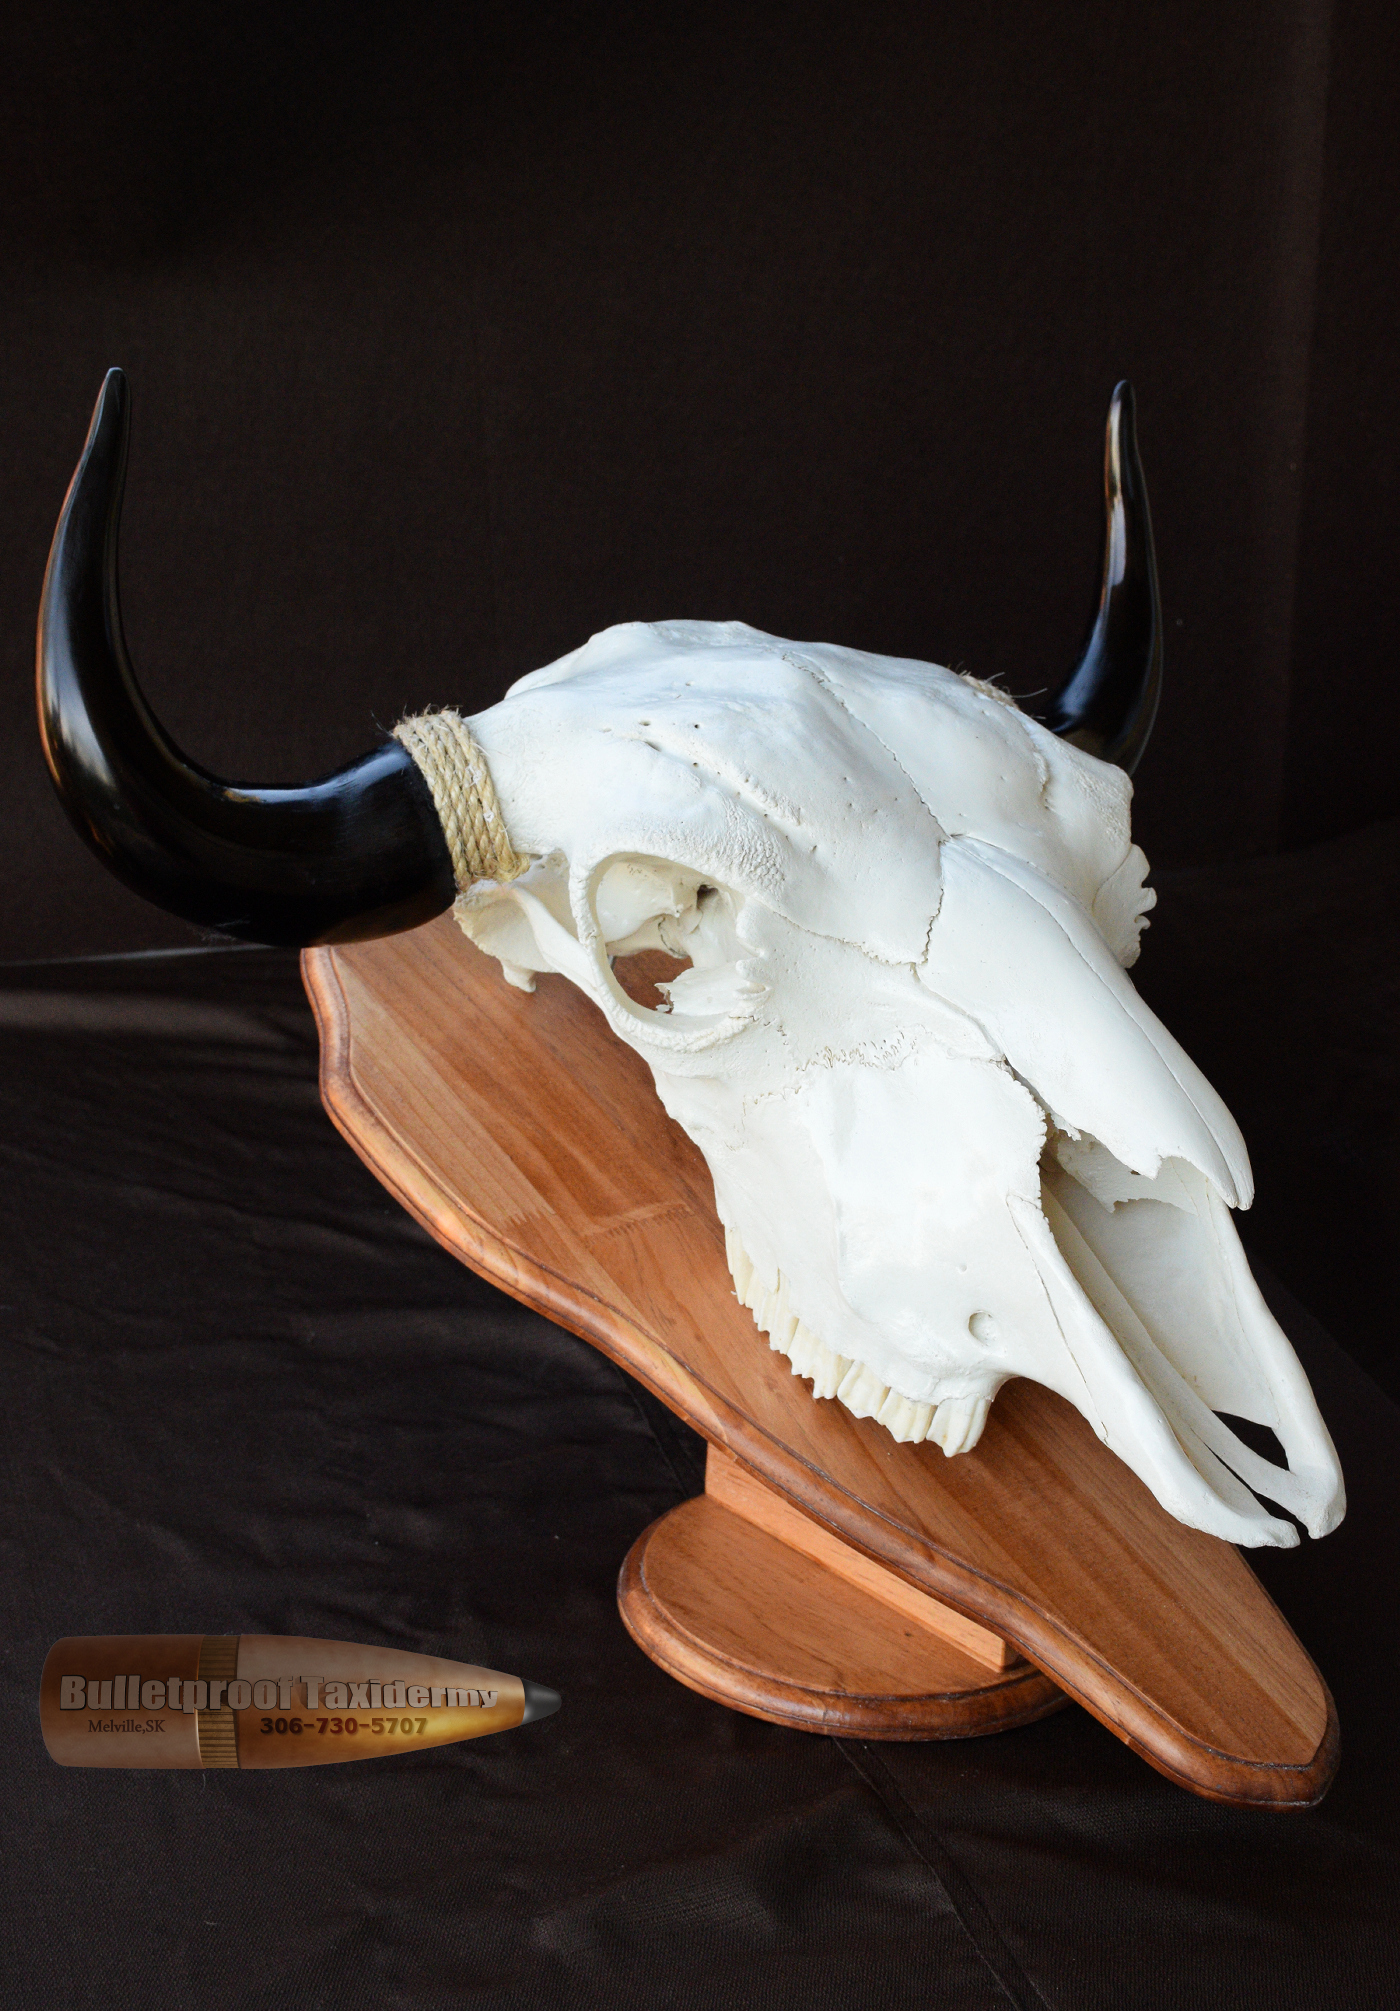 Bison Skull by Bulletproof Taxidermy- Melville, SK - Canada